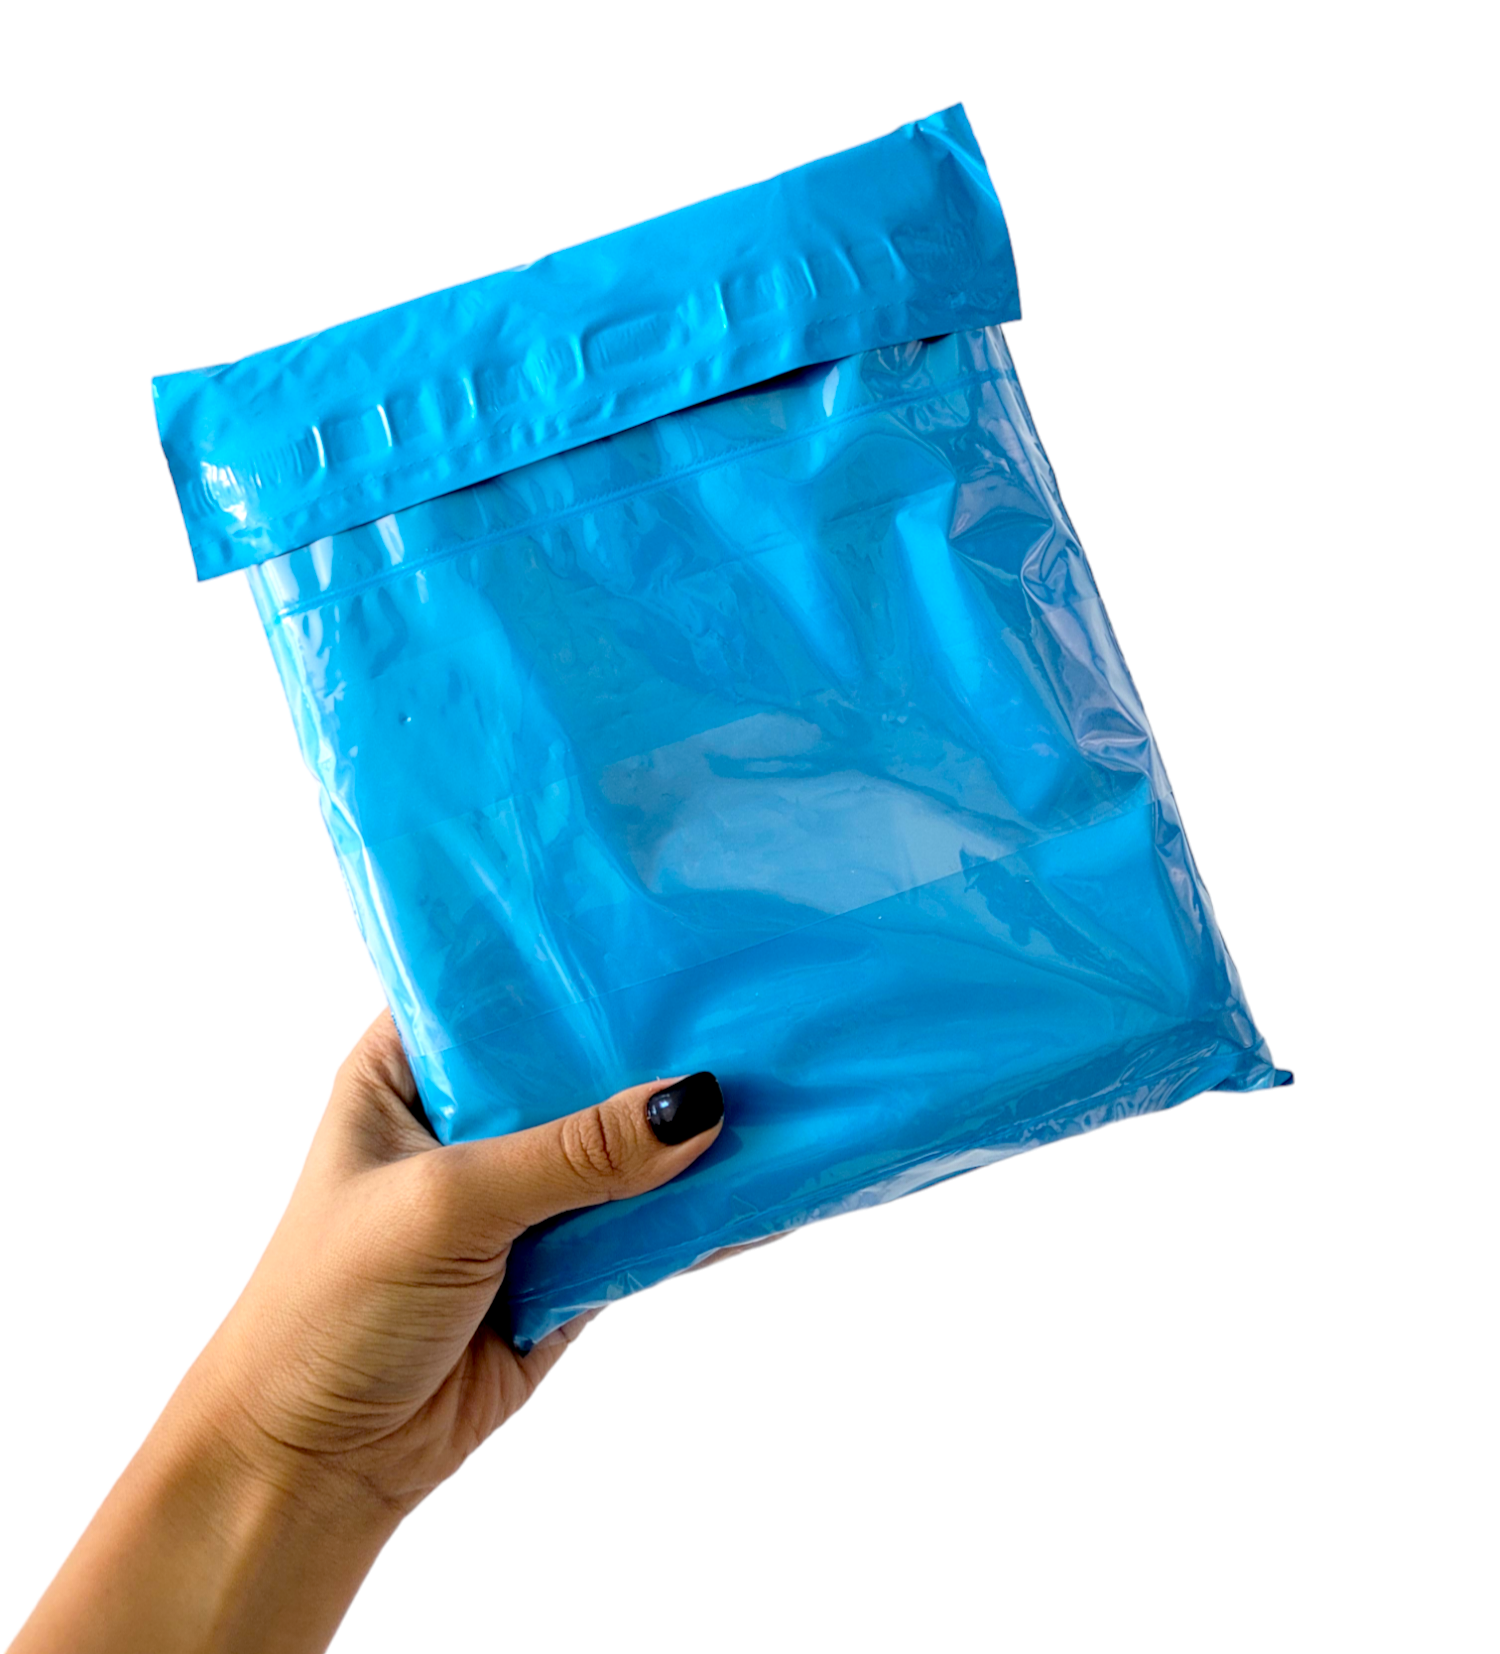 Bolsa De Seguridad Biodegradable Portaguia 19x25cm x 100 Unds Diferentes Colores